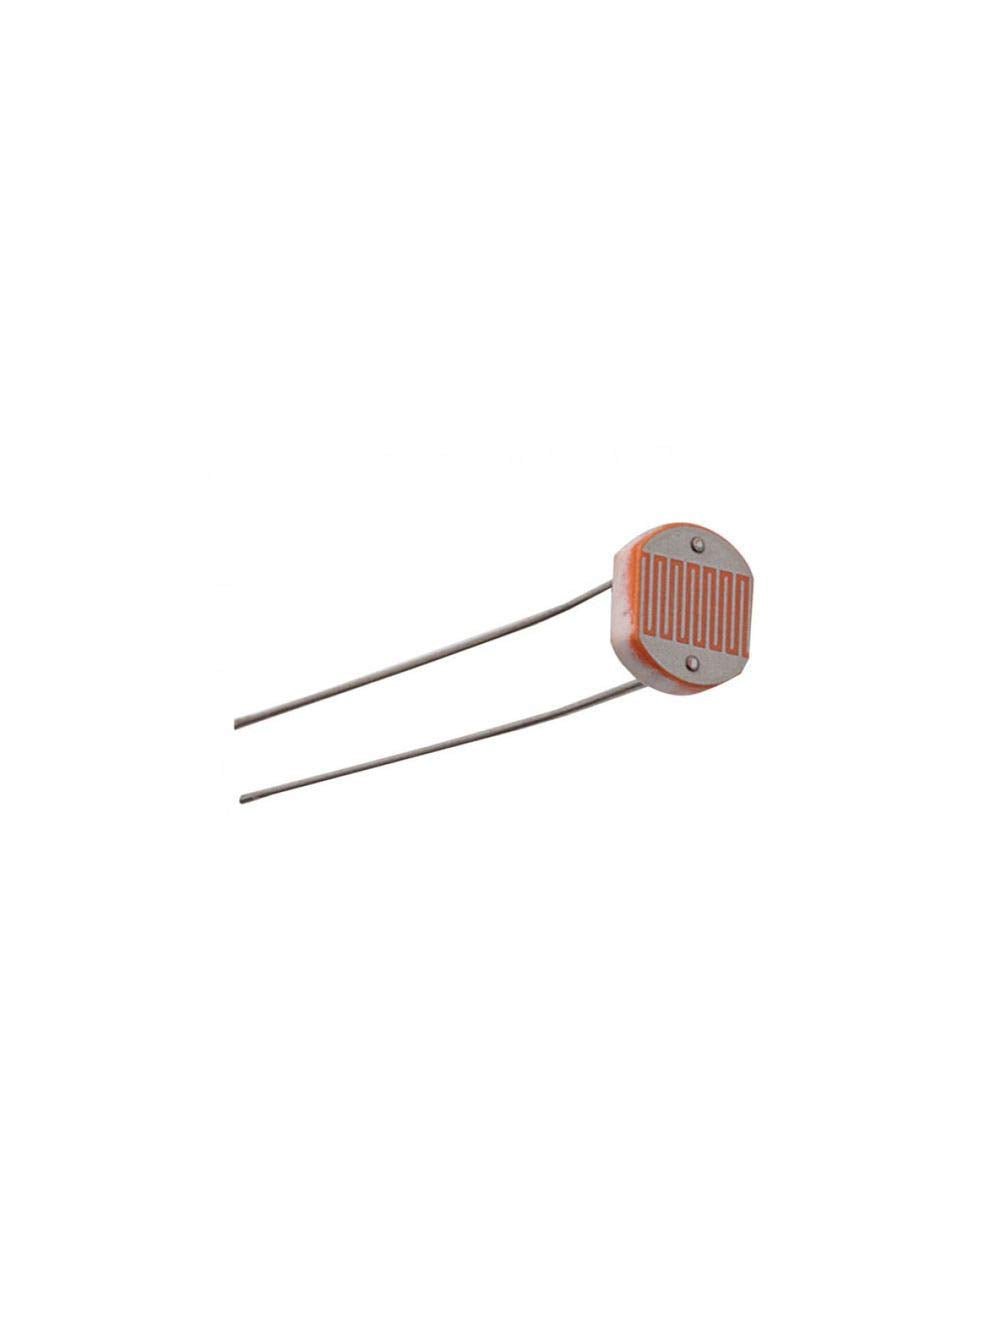 7mm LDR - Light Dependent Resistor